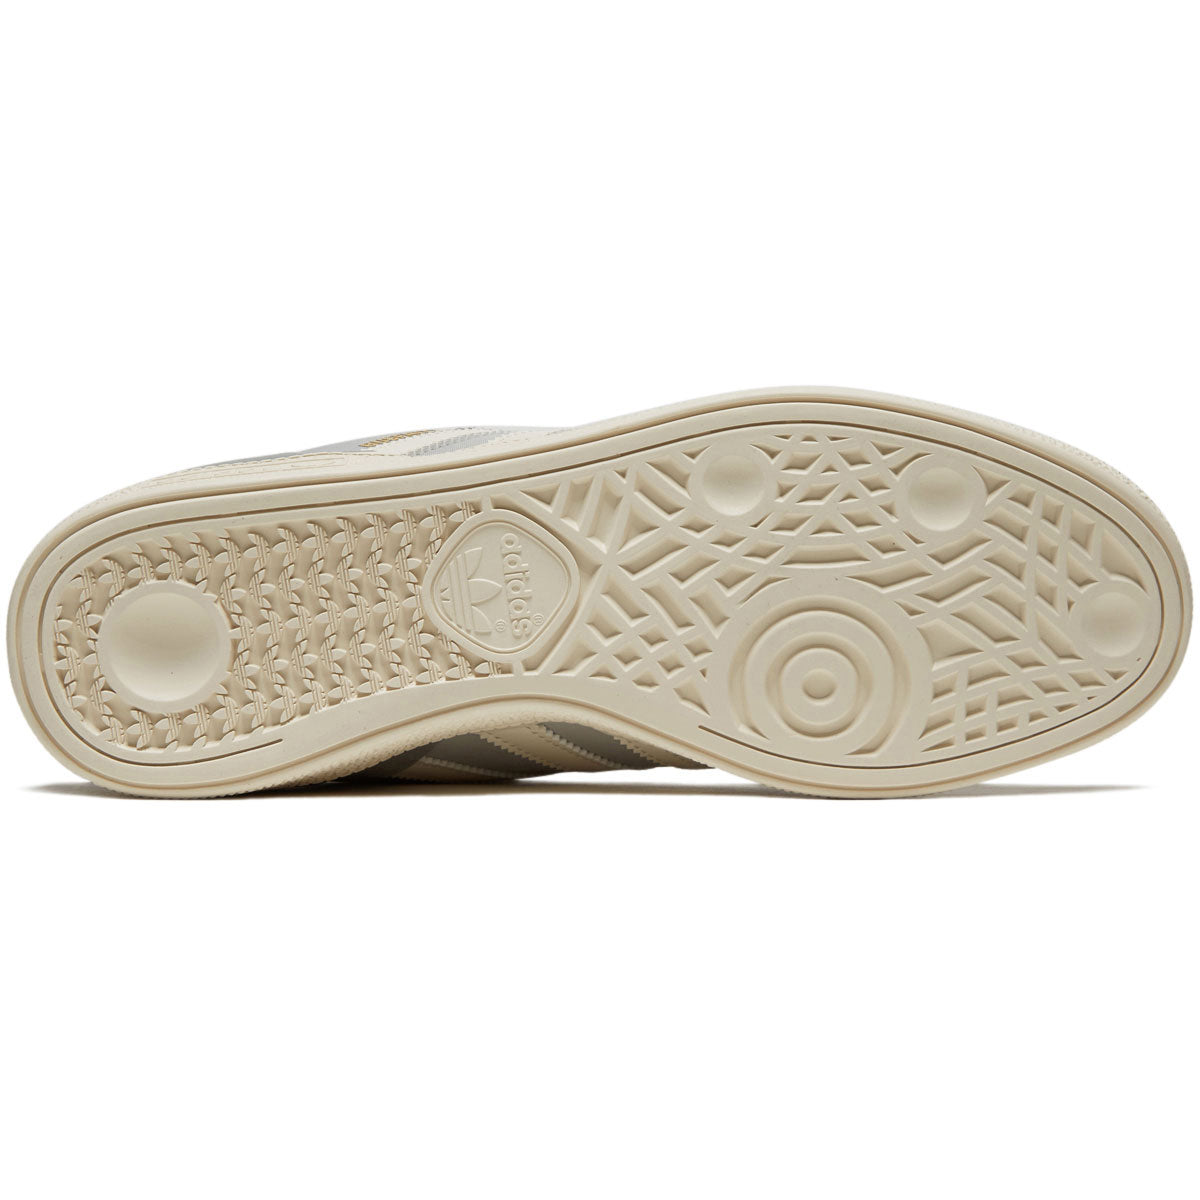 Adidas Busenitz Shoes - Solid Grey/Chalk White/Gold Metallic image 4